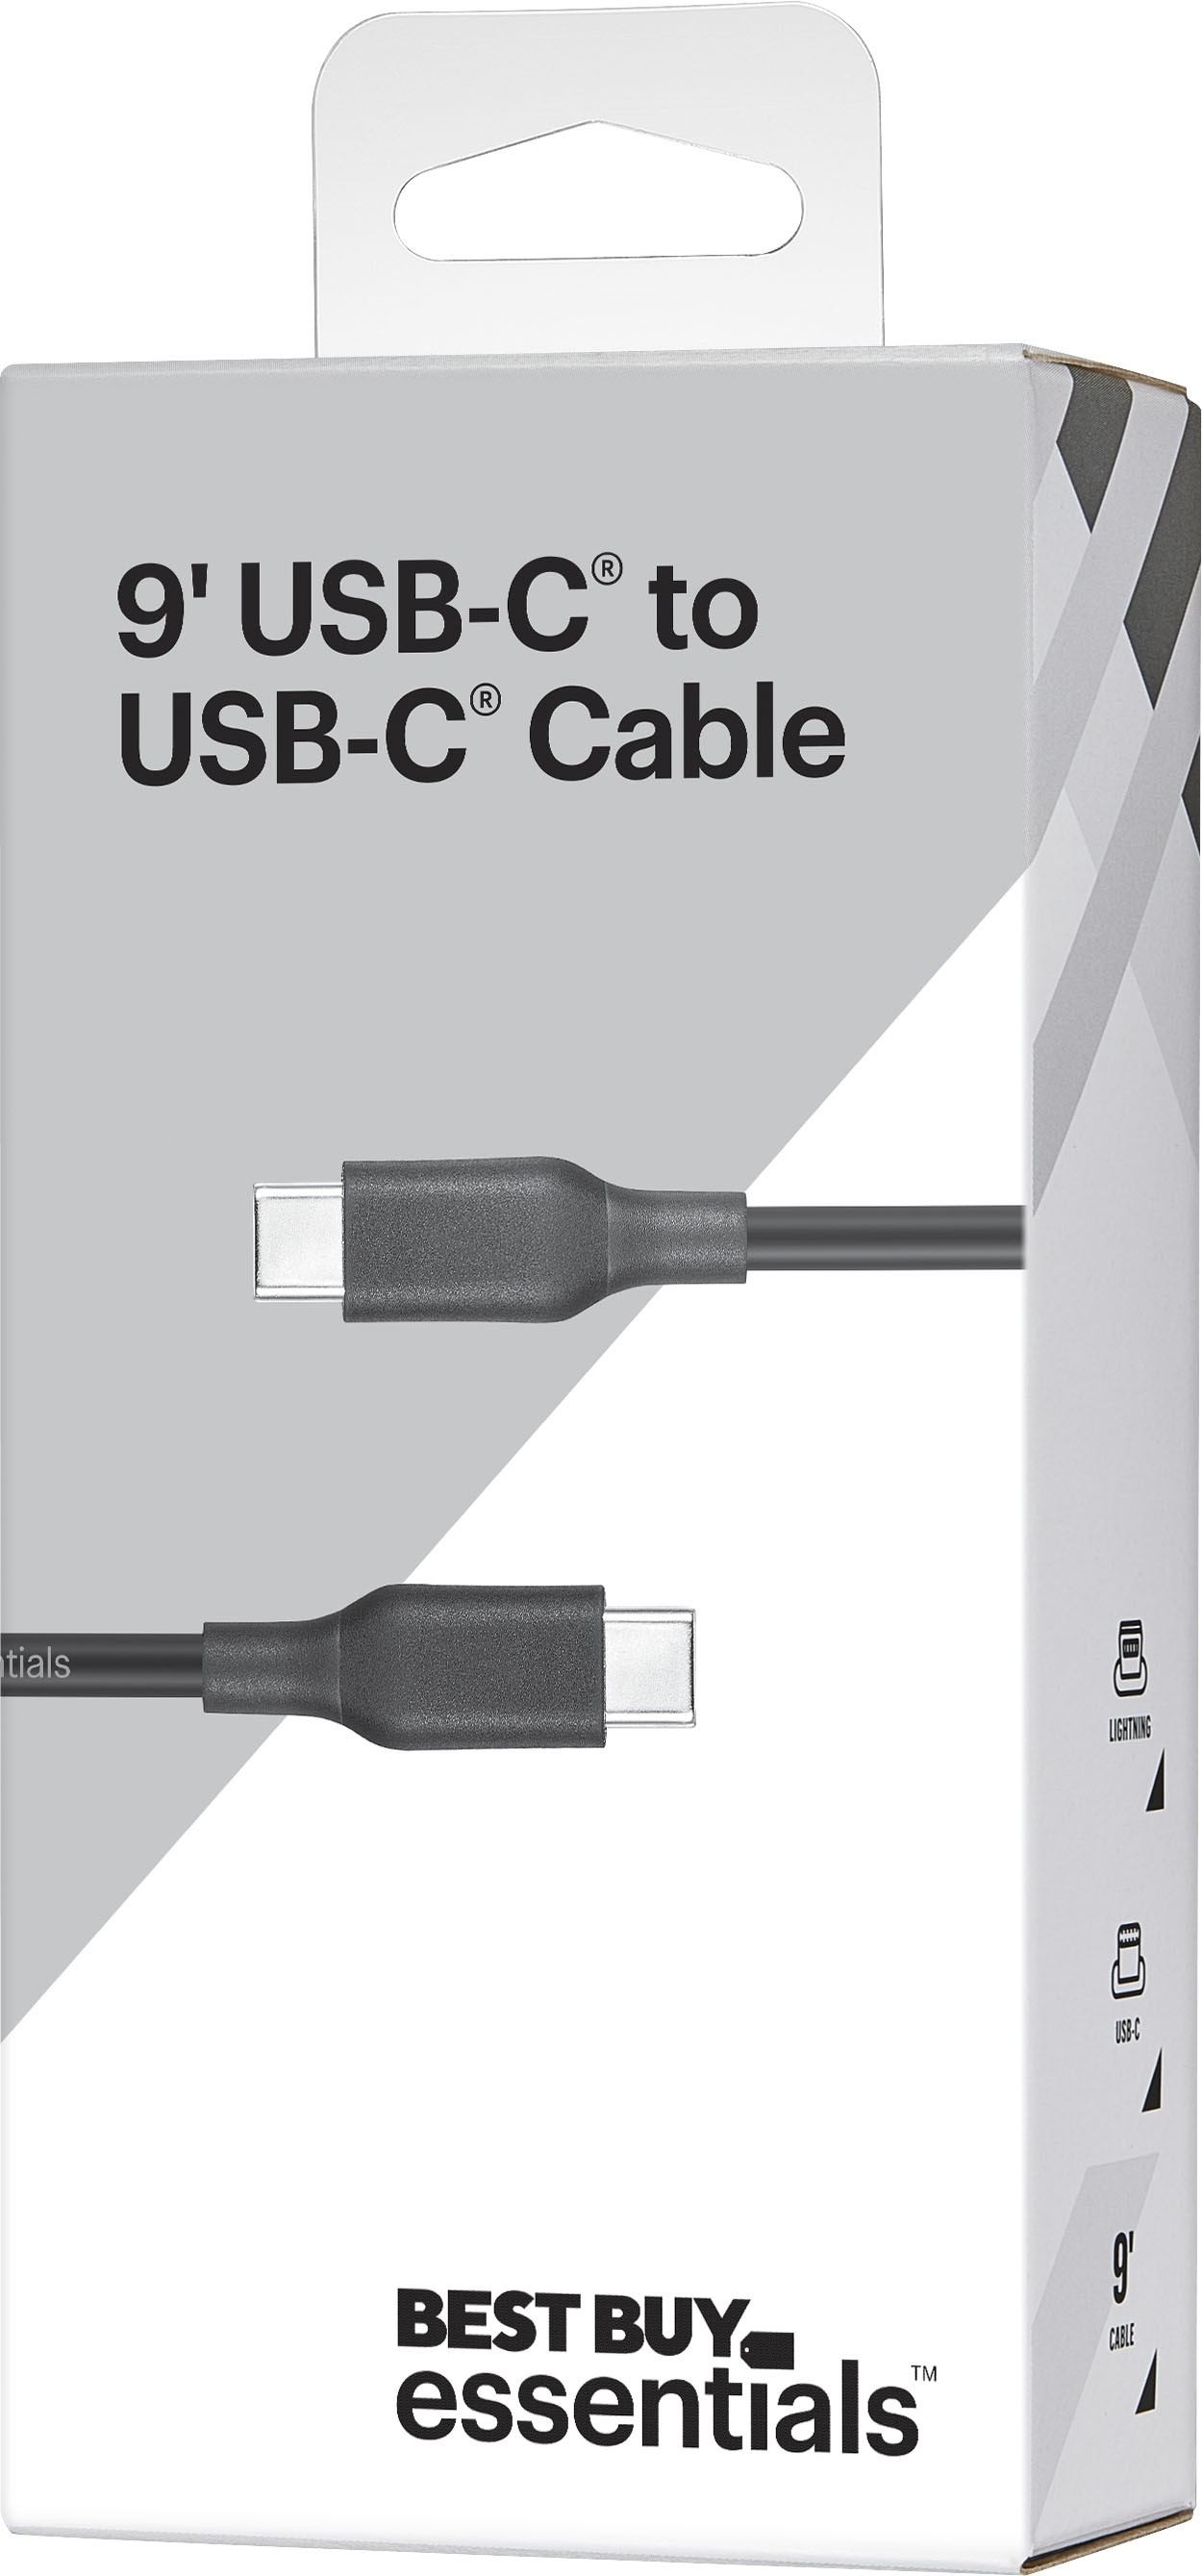 USB Type-C - Best Buy